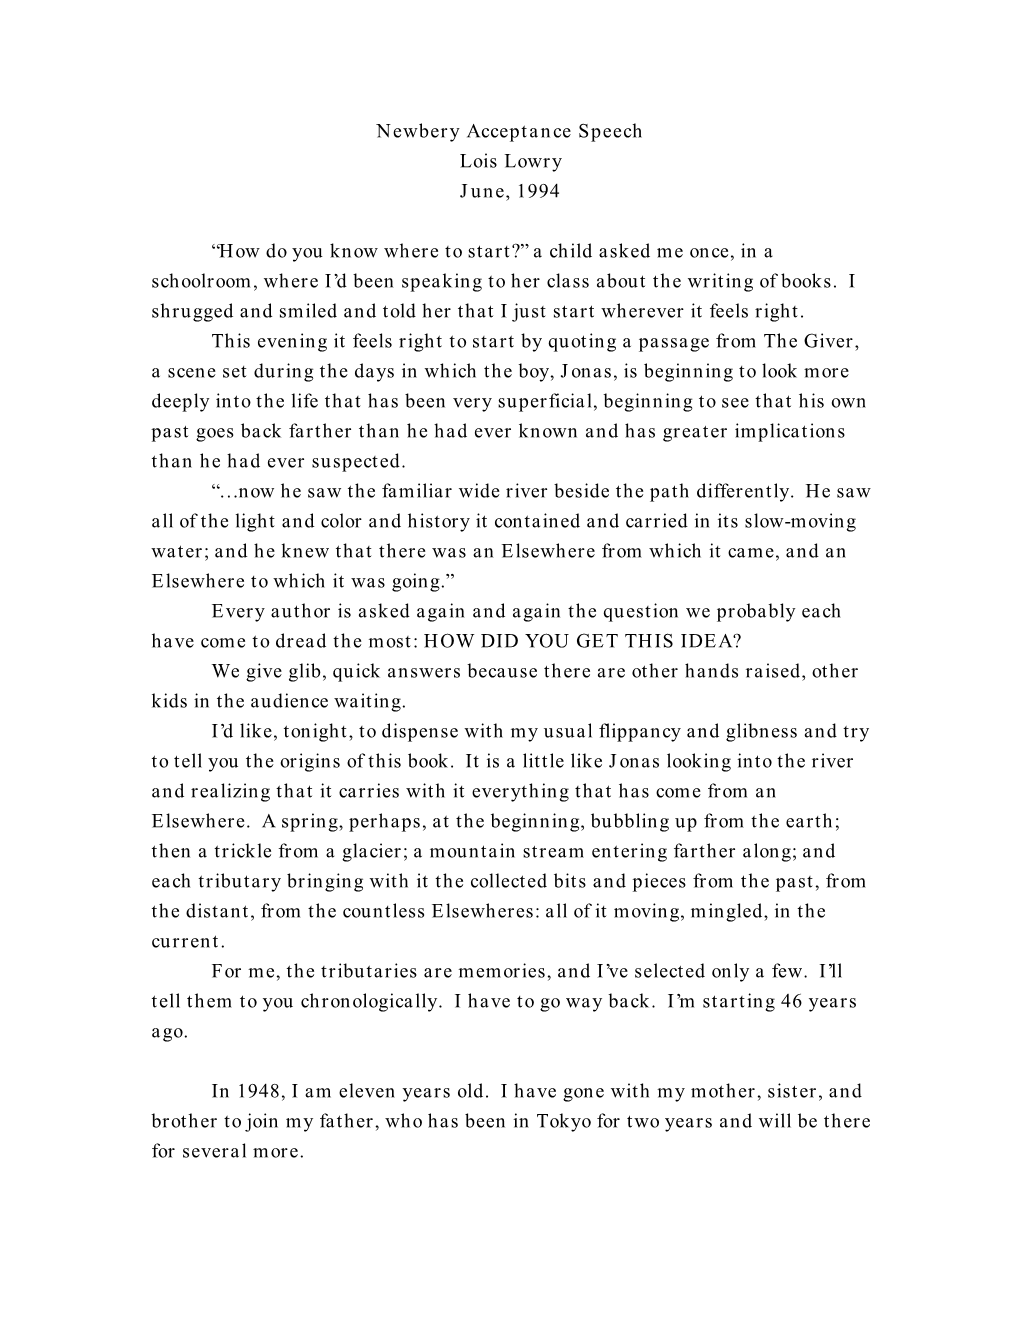 Newbery Acceptance Speech Lois Lowry June, 1994 “How Do You